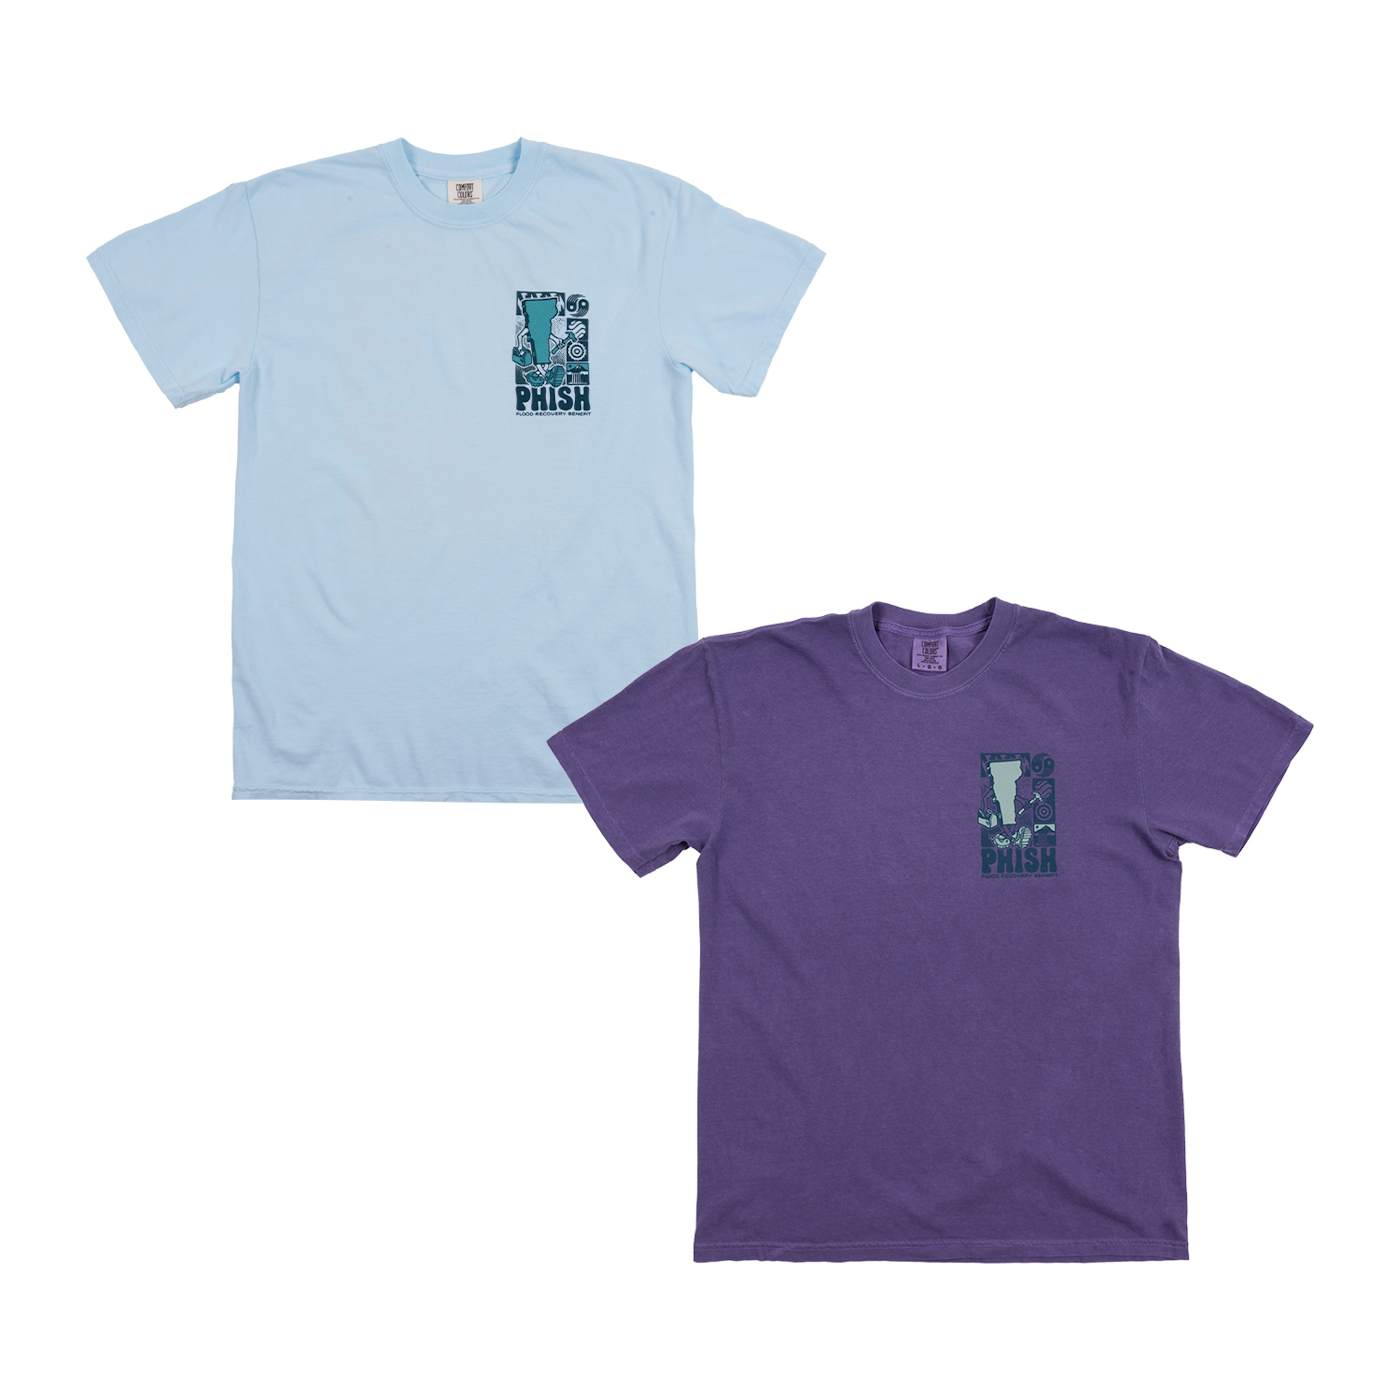 2004 Supreme Purple on Black Box Logo Tee Shirt SIZE XL